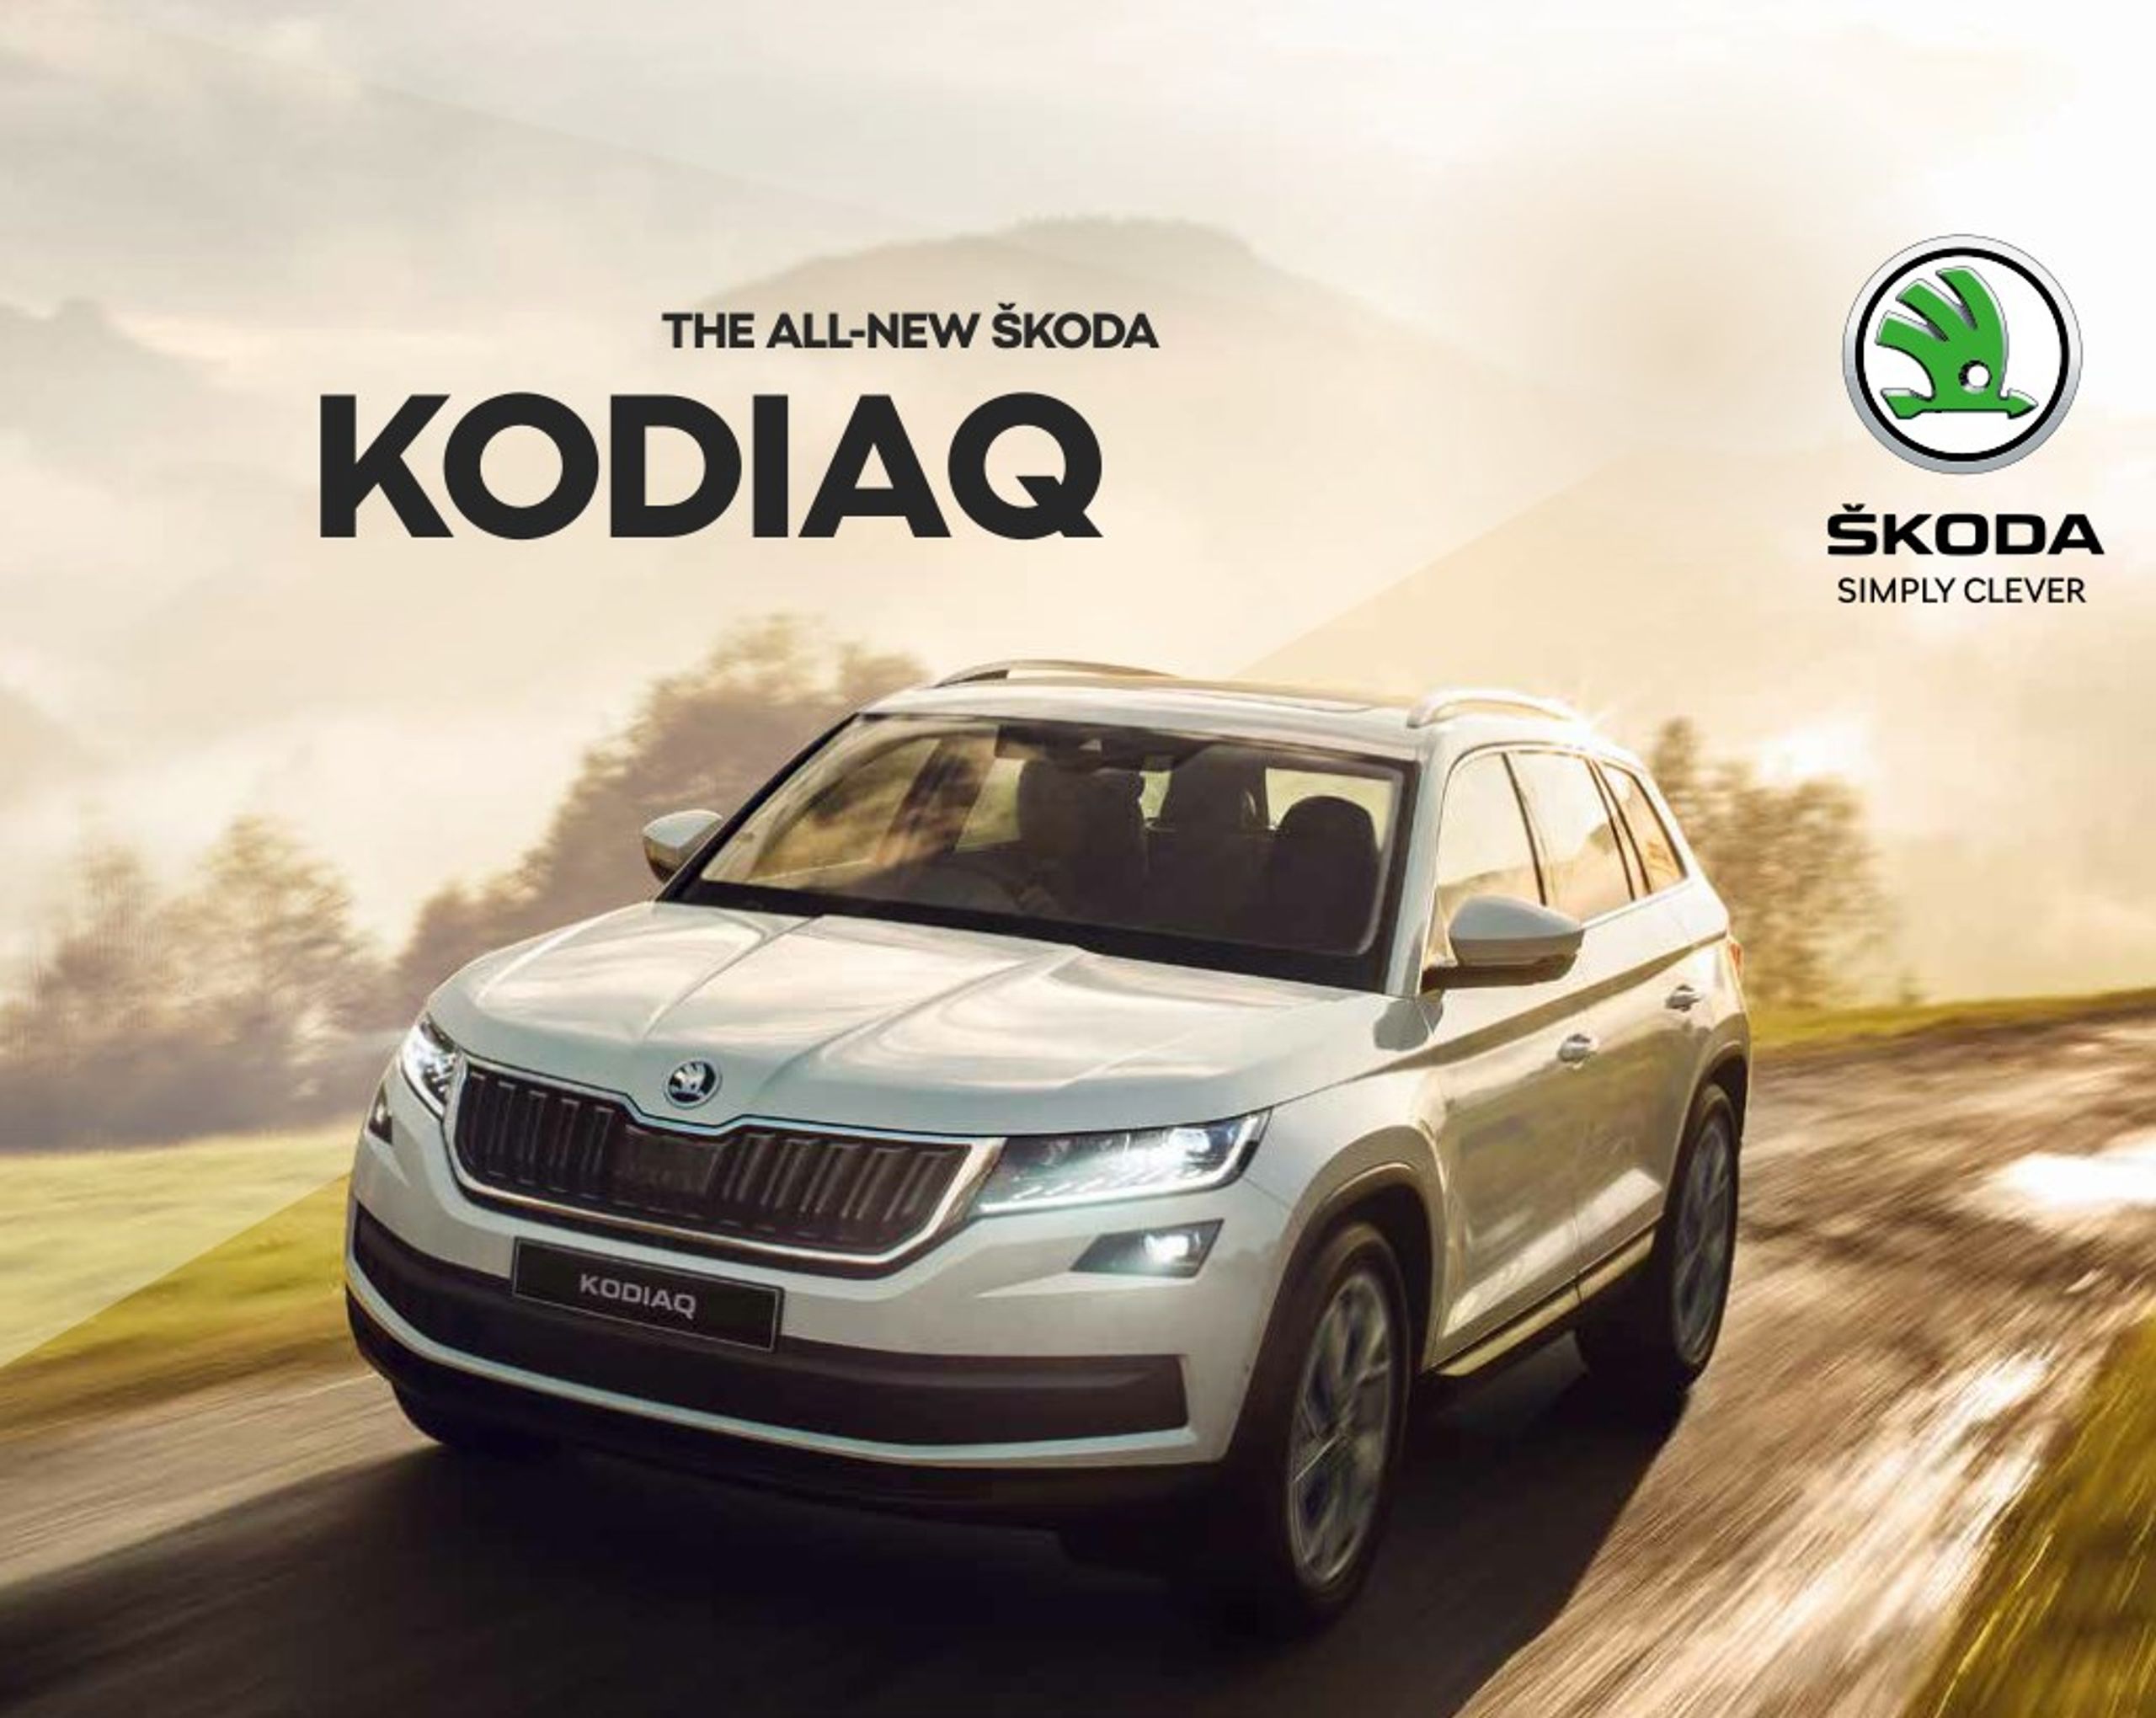 Skoda's brand-new luxury SUV, Kodiaq, stands tall among seven